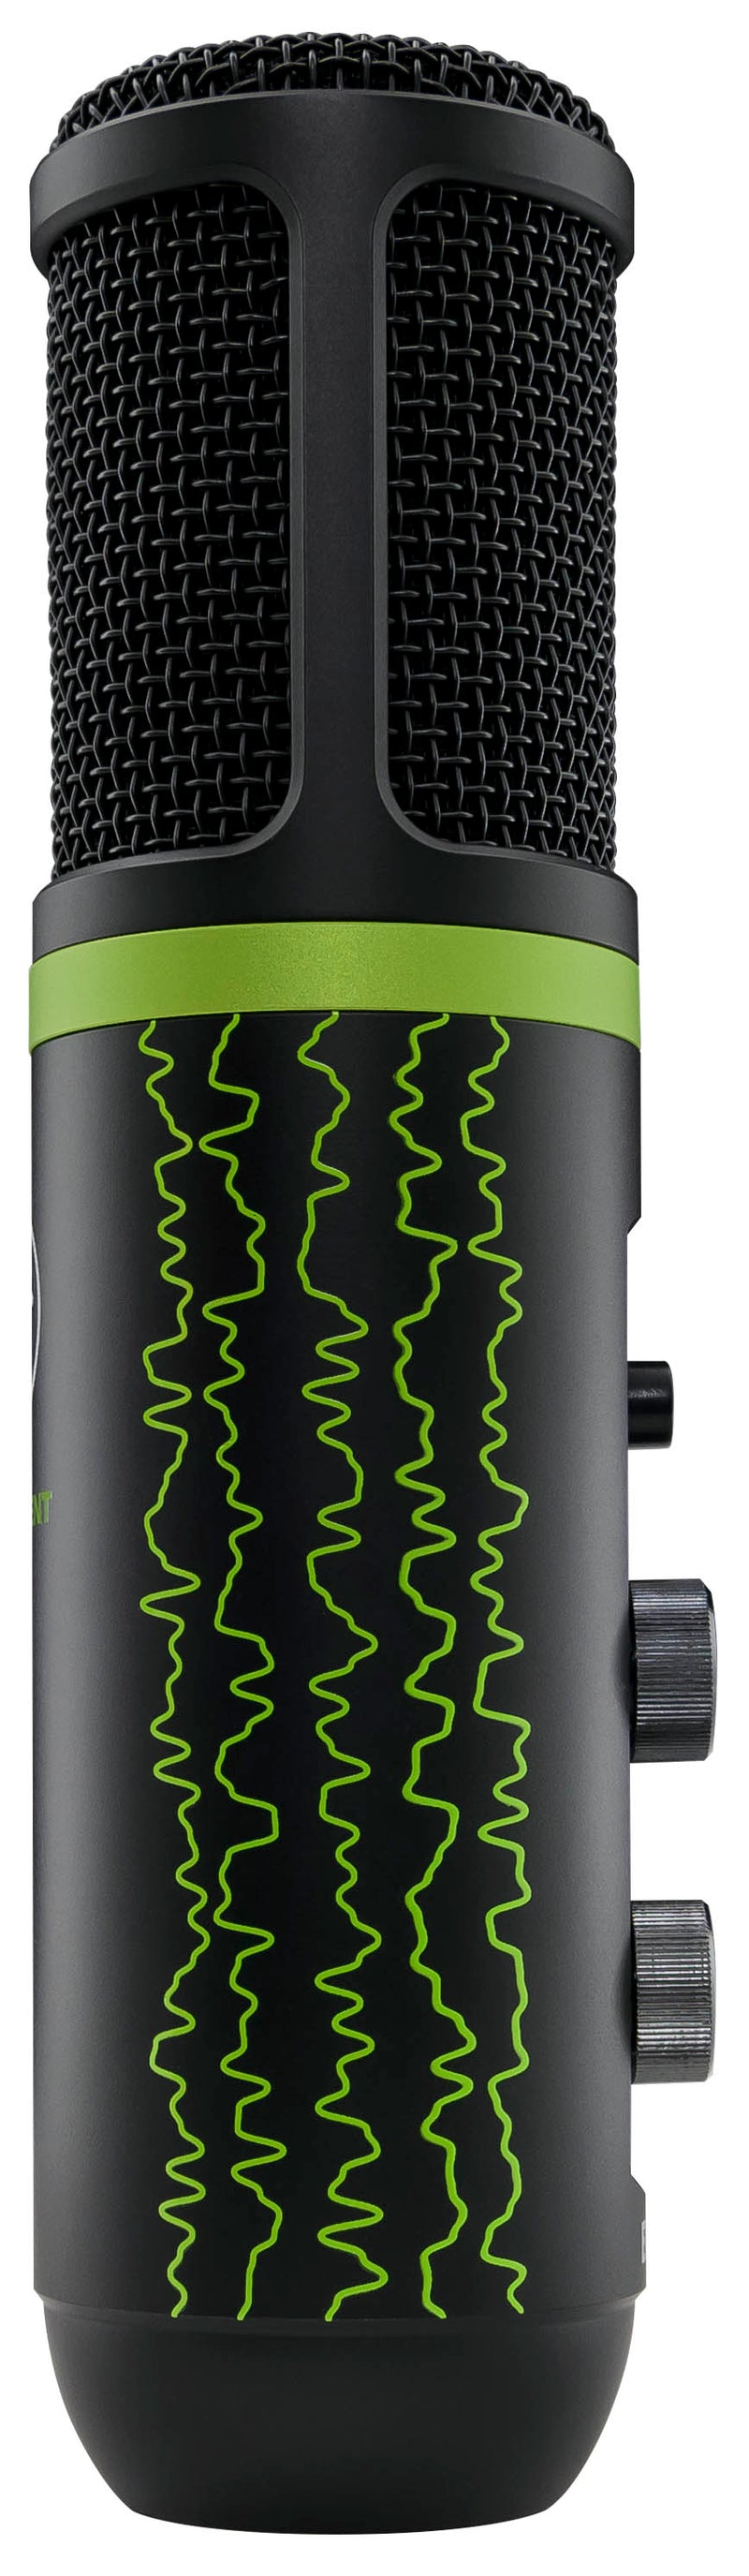 Mackie EM-USB Condenser Microphone - Limited Edition Green Lightning